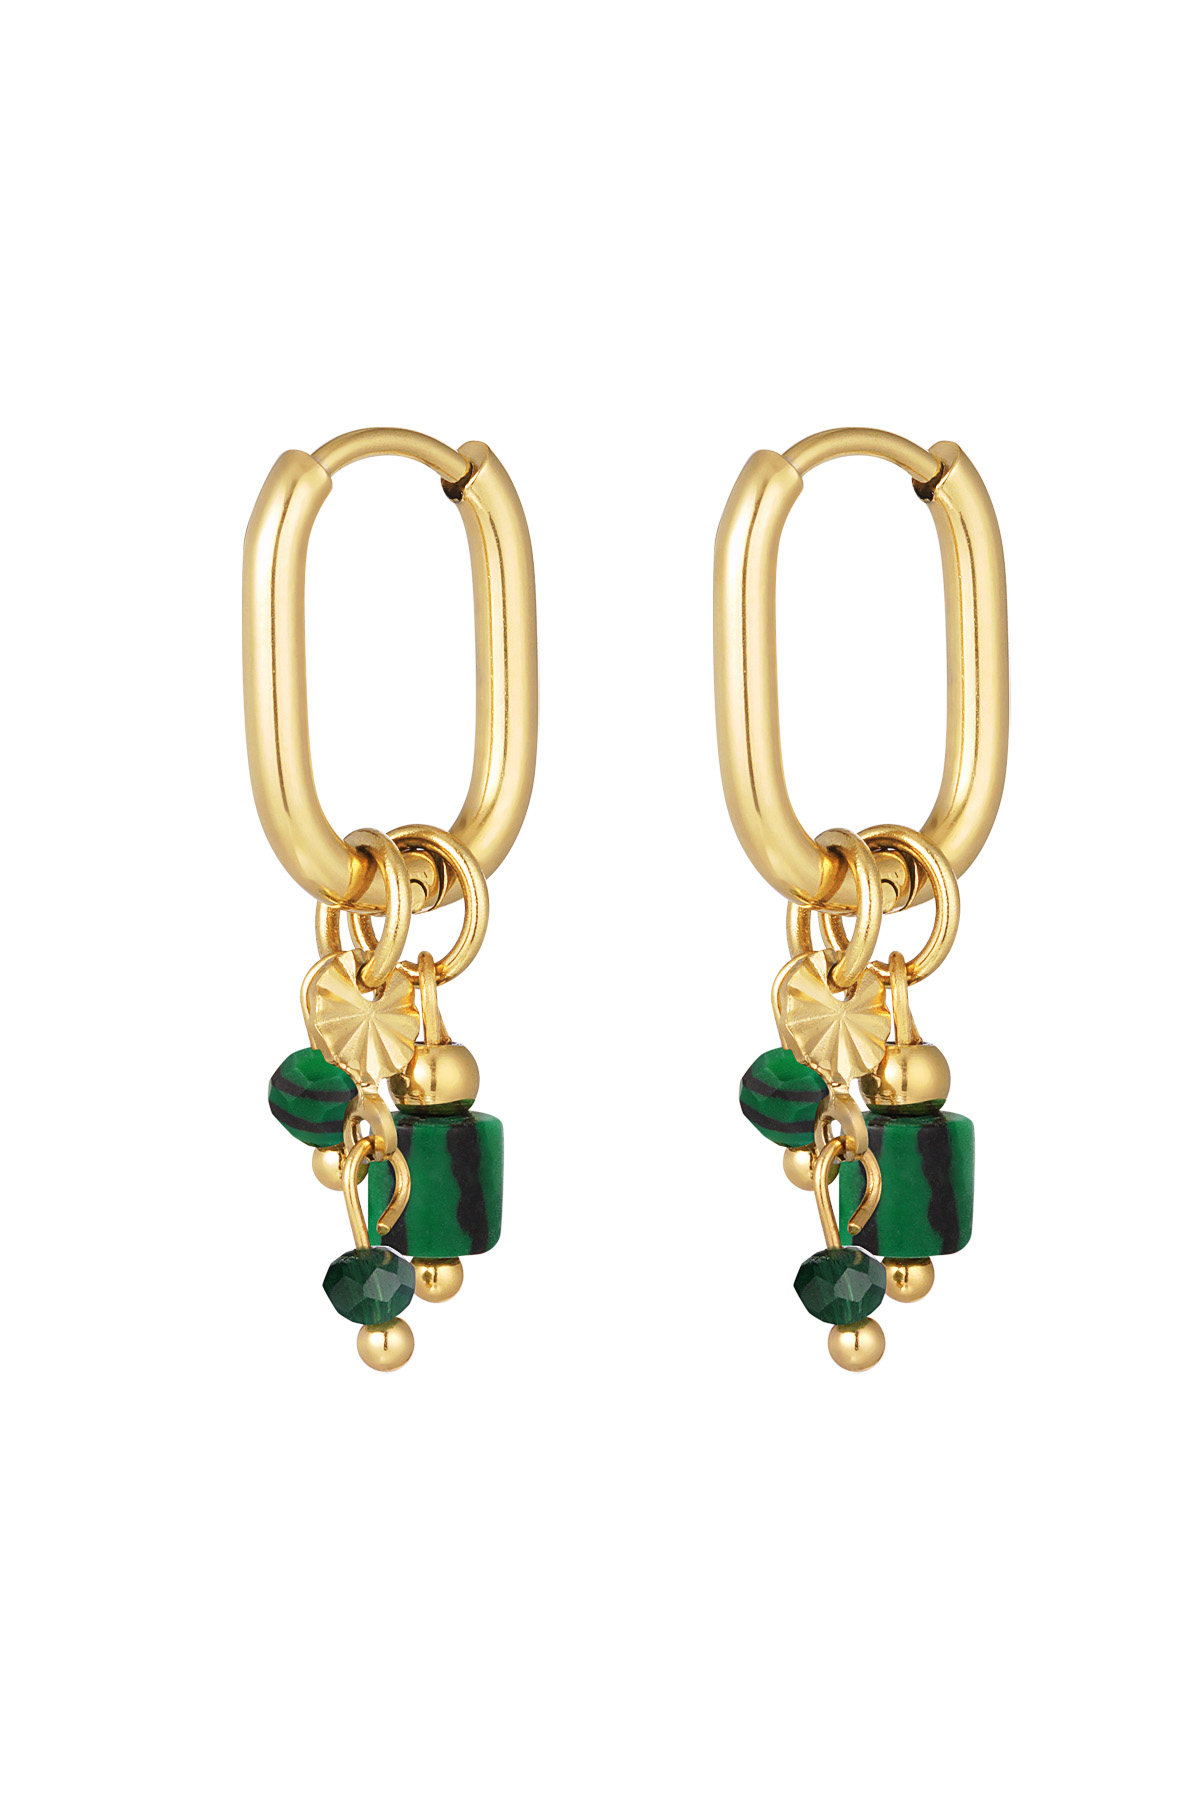 Ohrring mit grünen Perlen - Gold